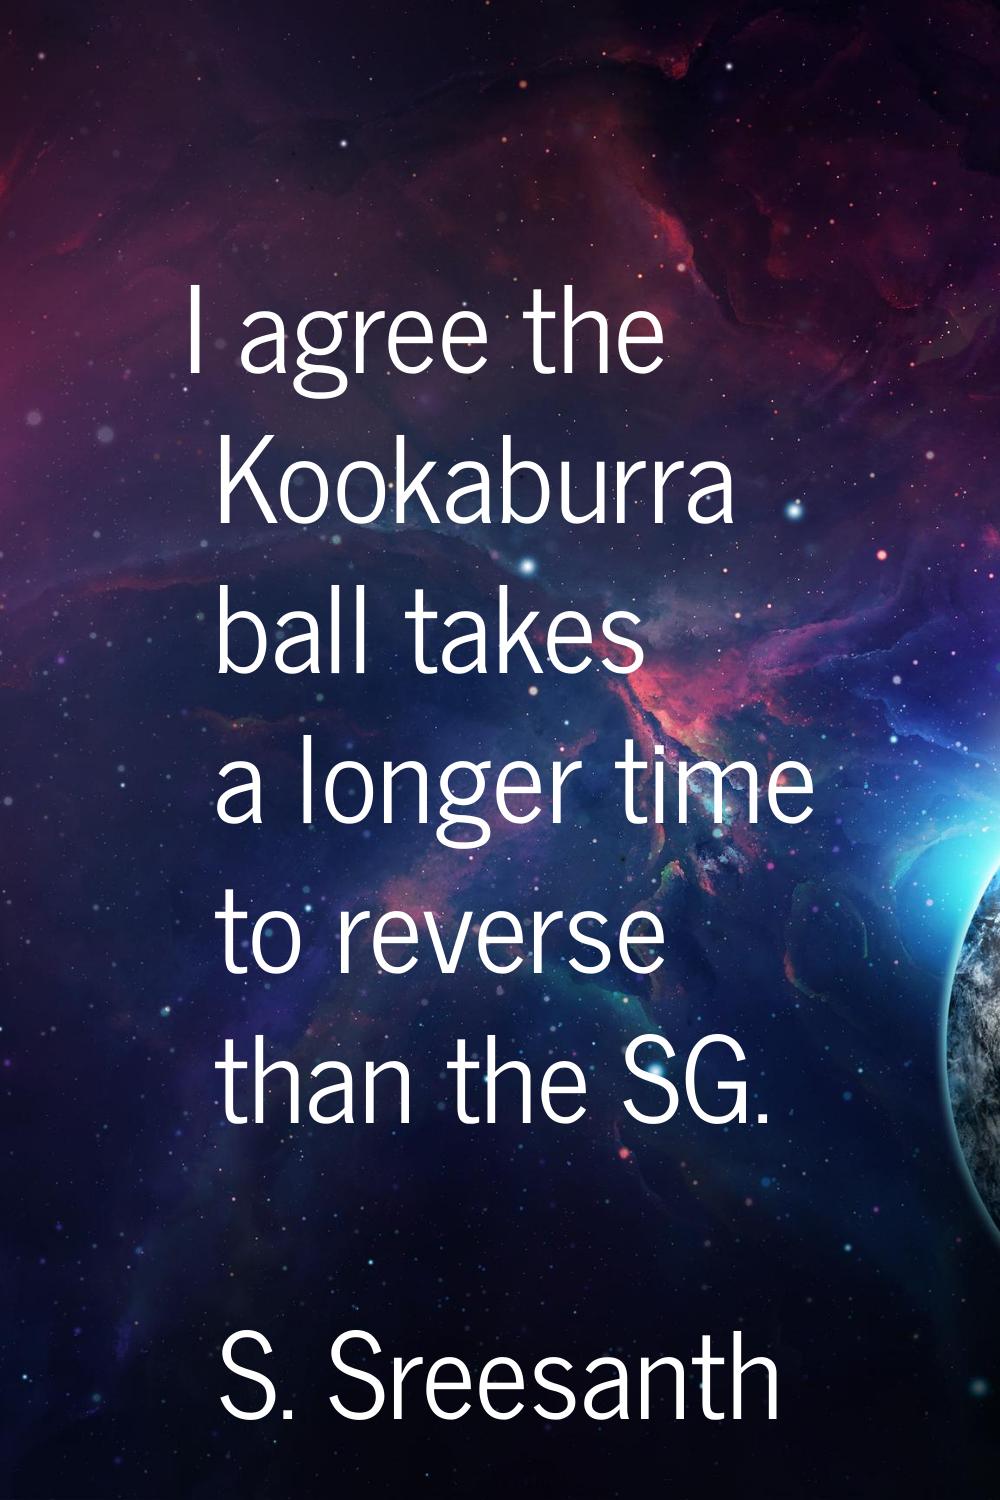 I agree the Kookaburra ball takes a longer time to reverse than the SG.